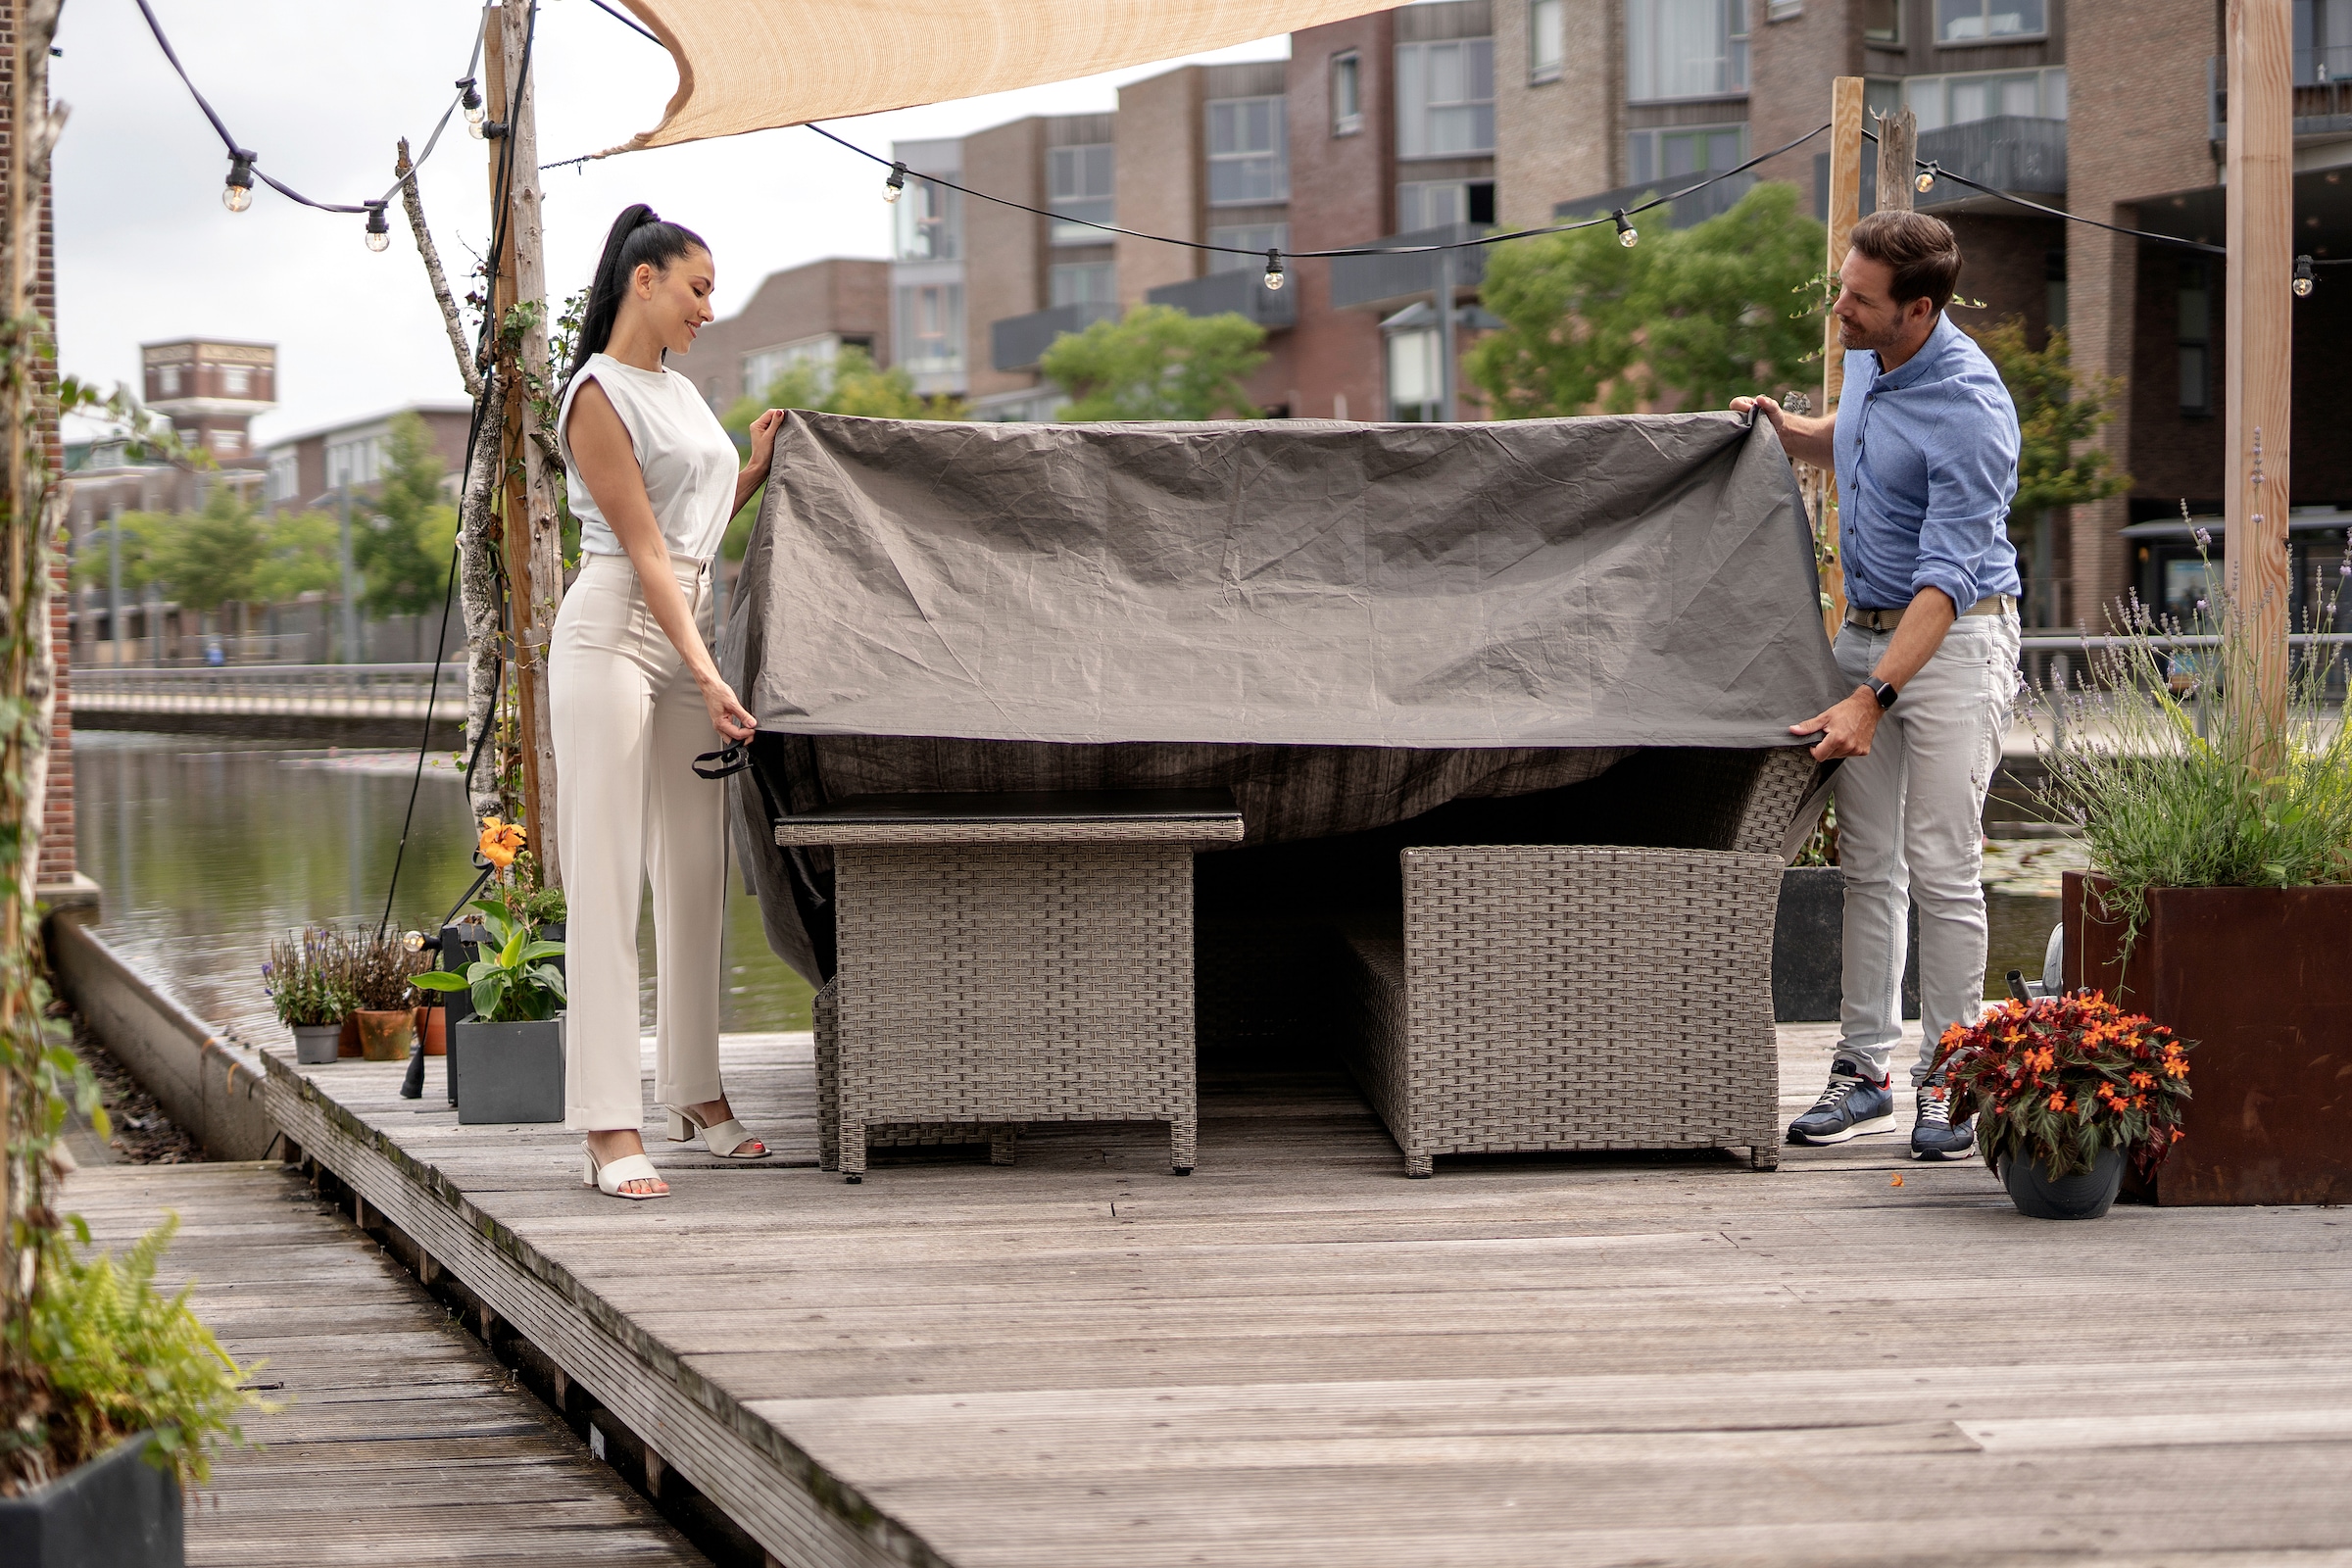 winza outdoor covers Gartenmöbel-Schutzhülle, geeignet für Loungeset, 260x260x95 cm